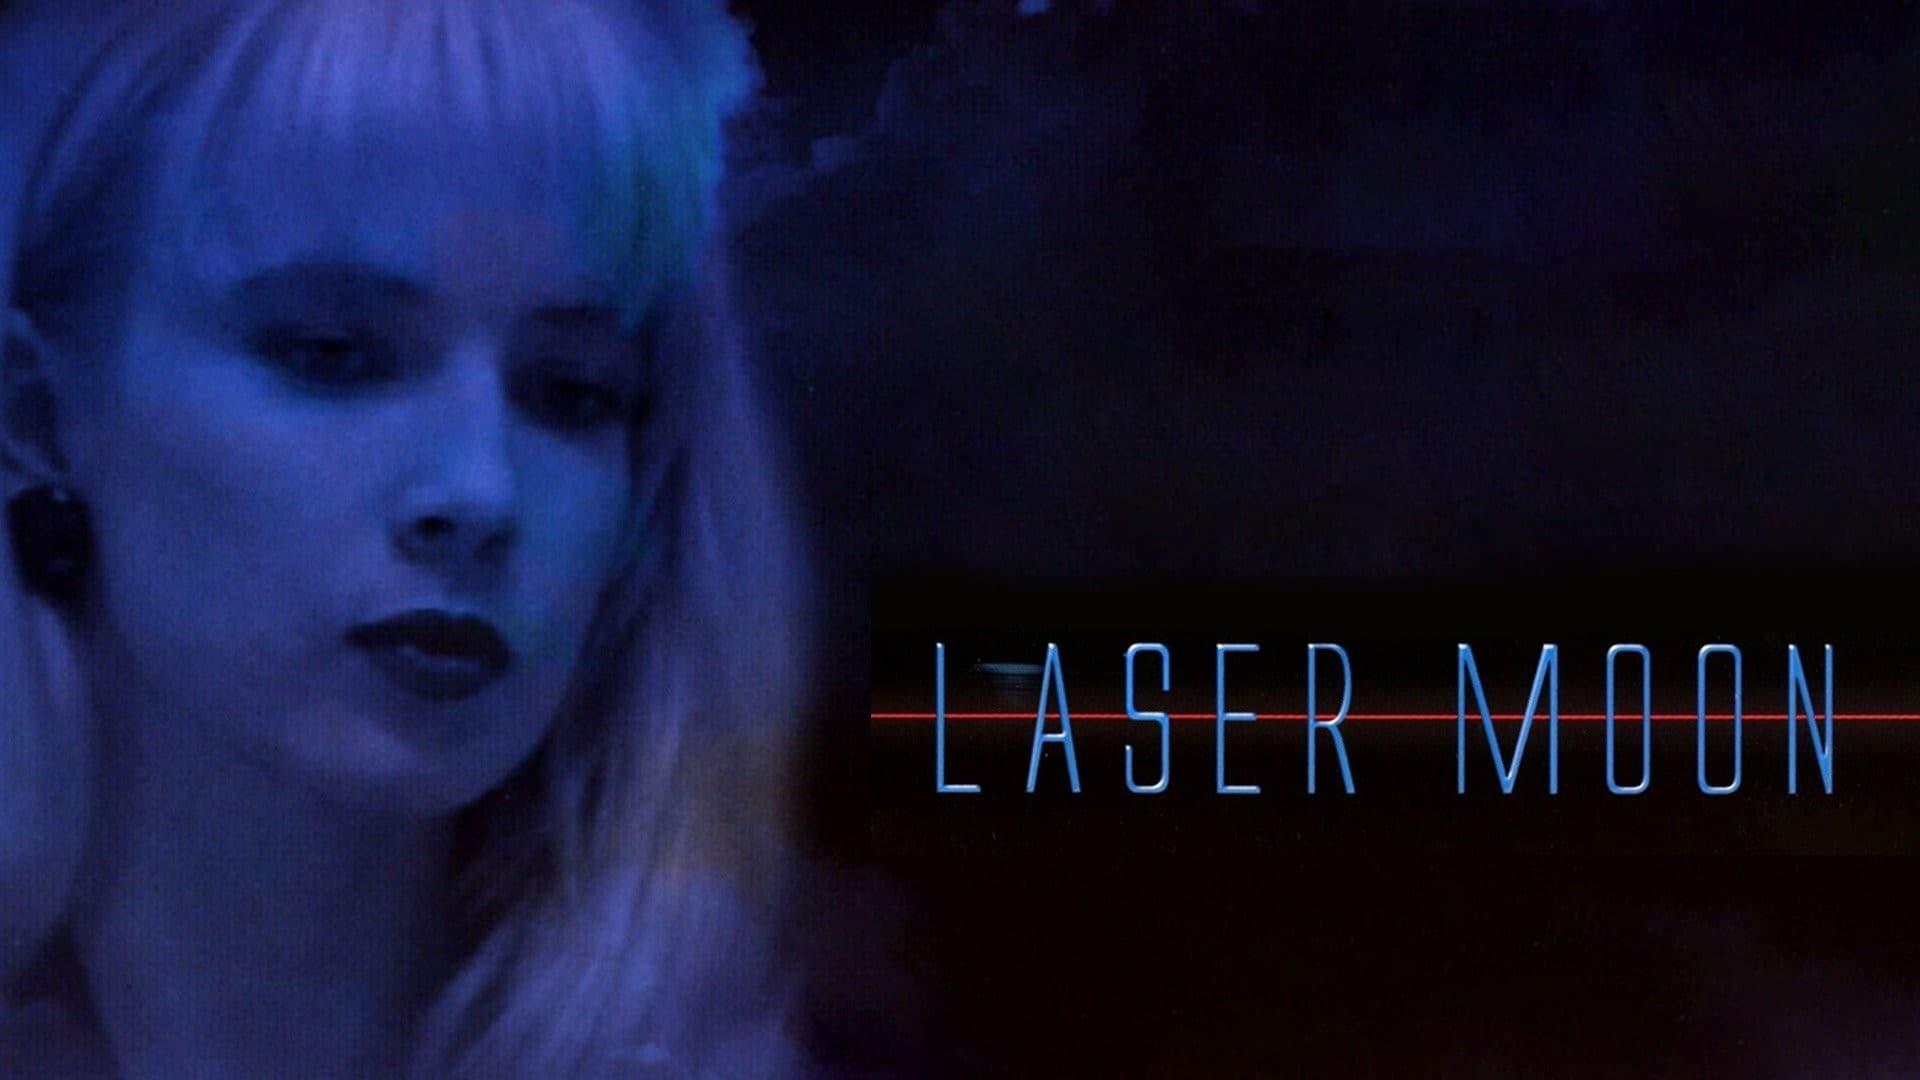 Laser Moon backdrop